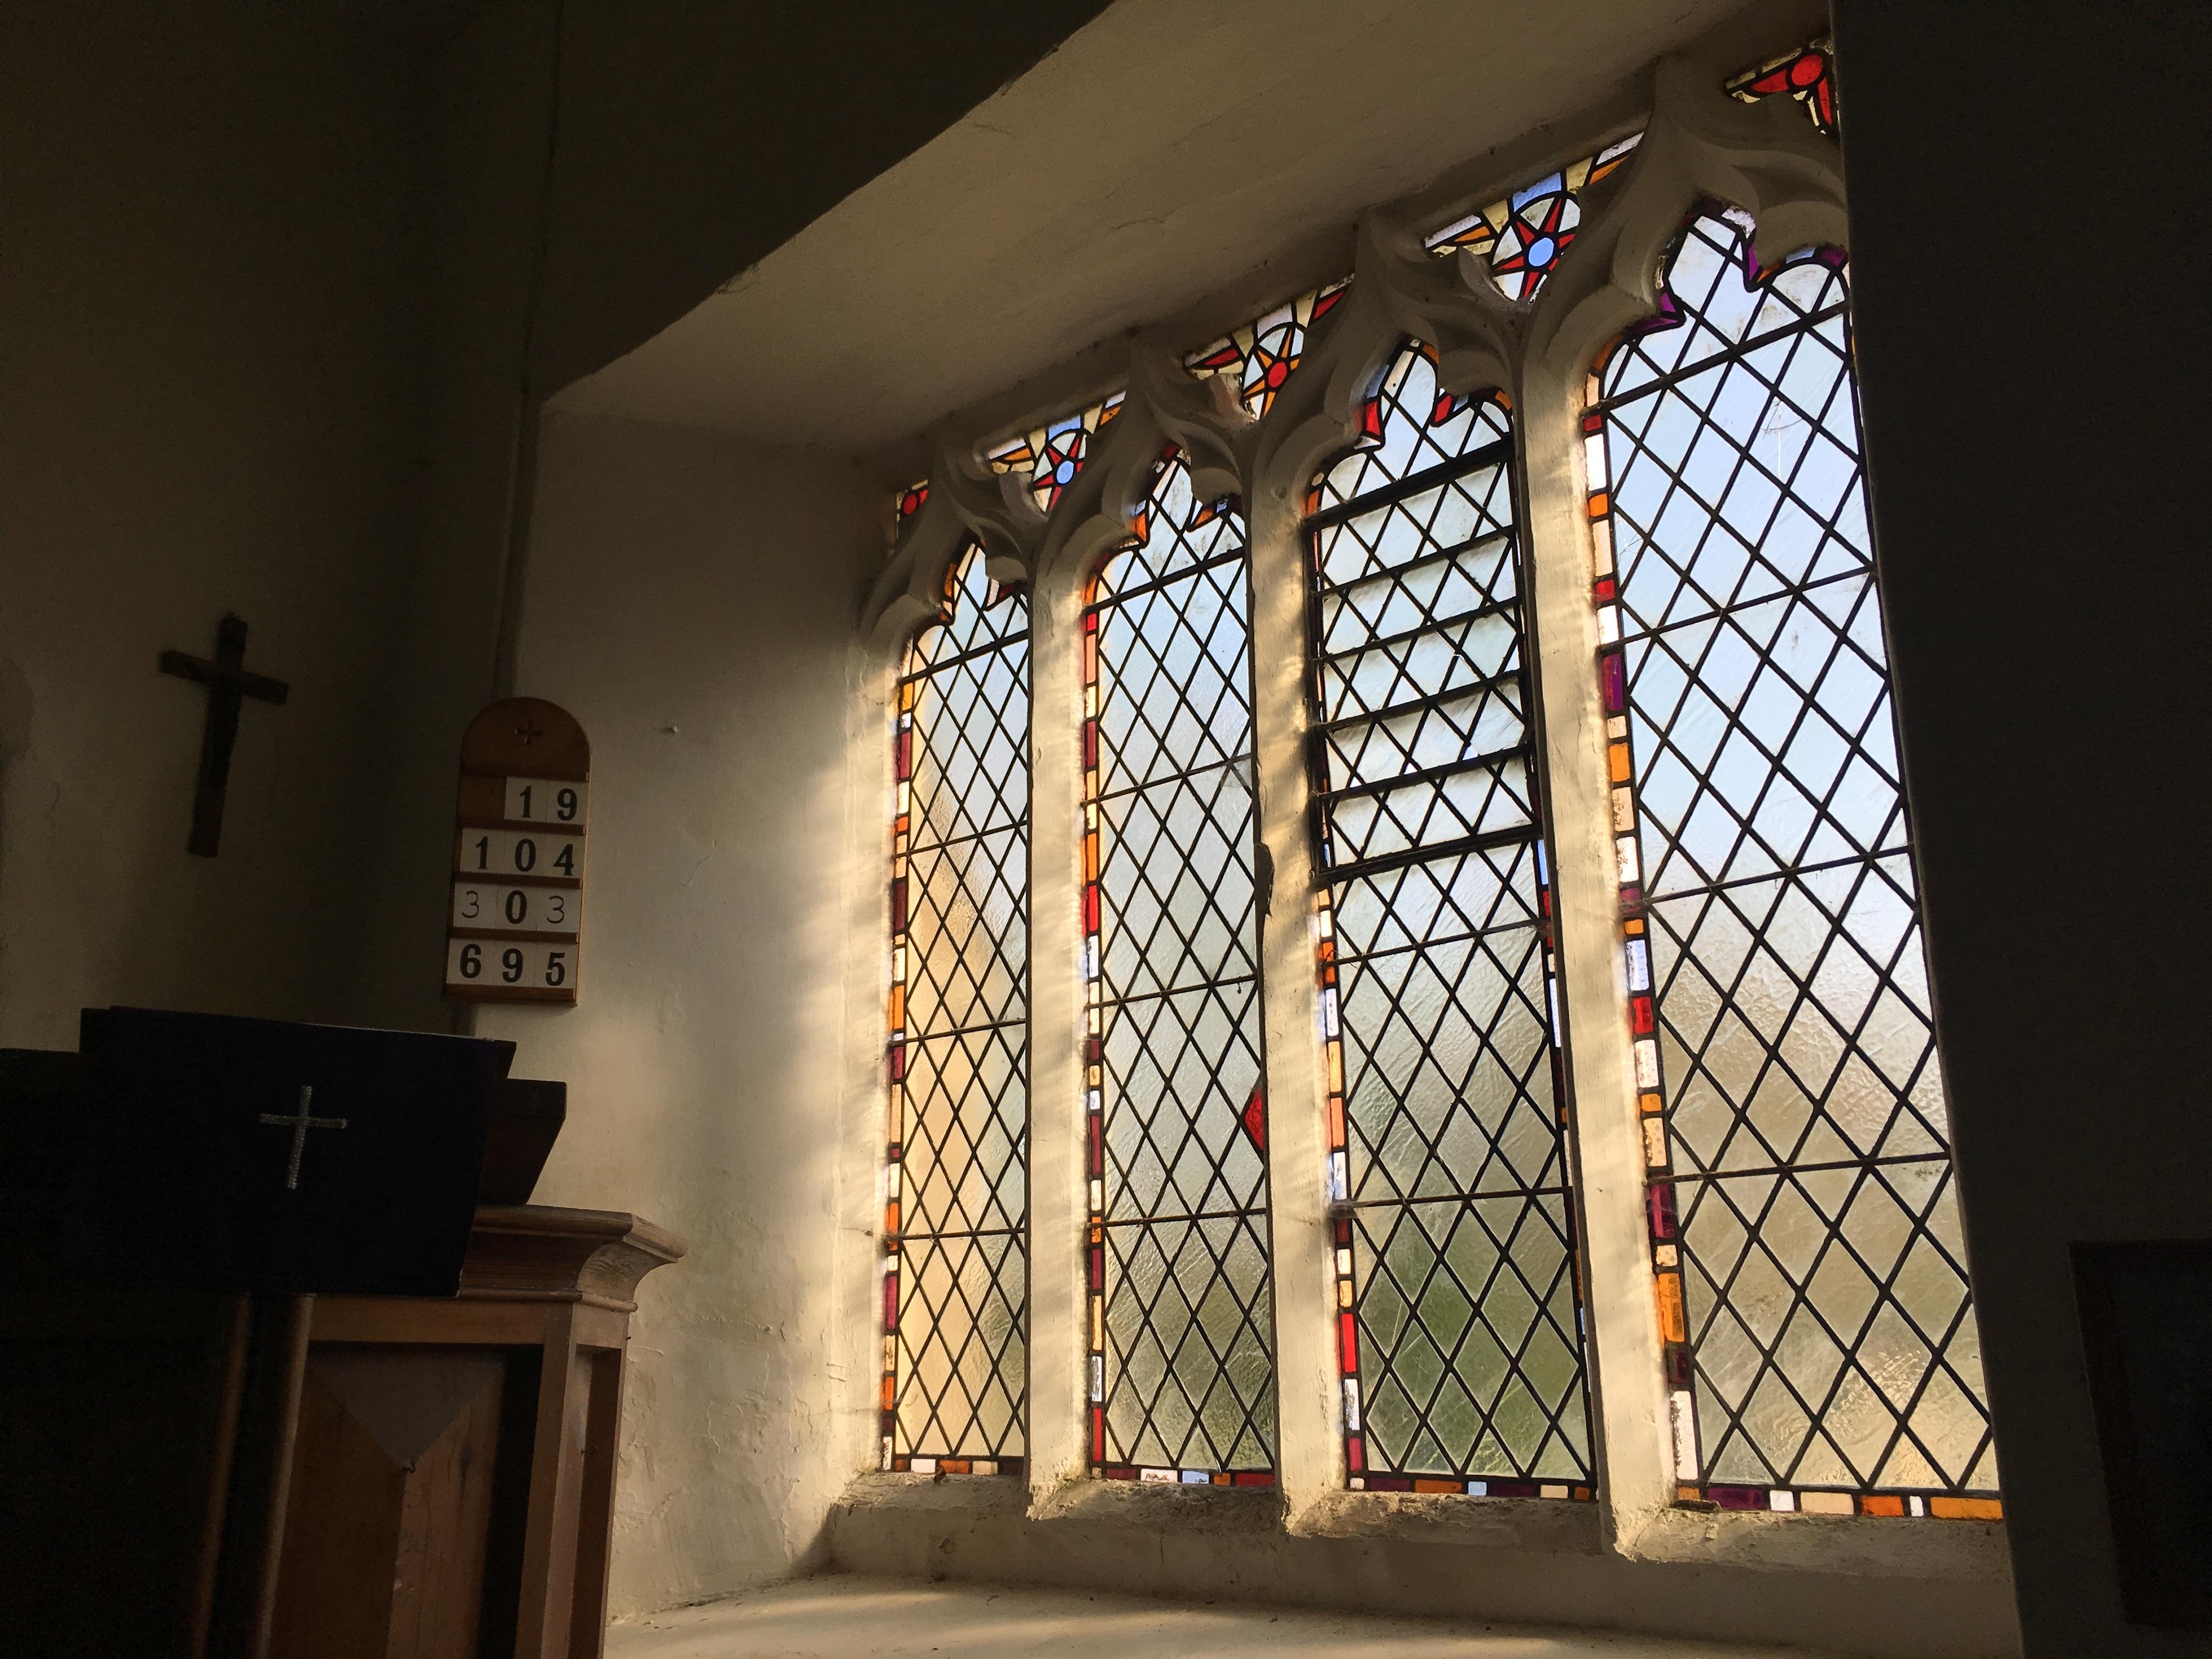 Light flooding through a church window